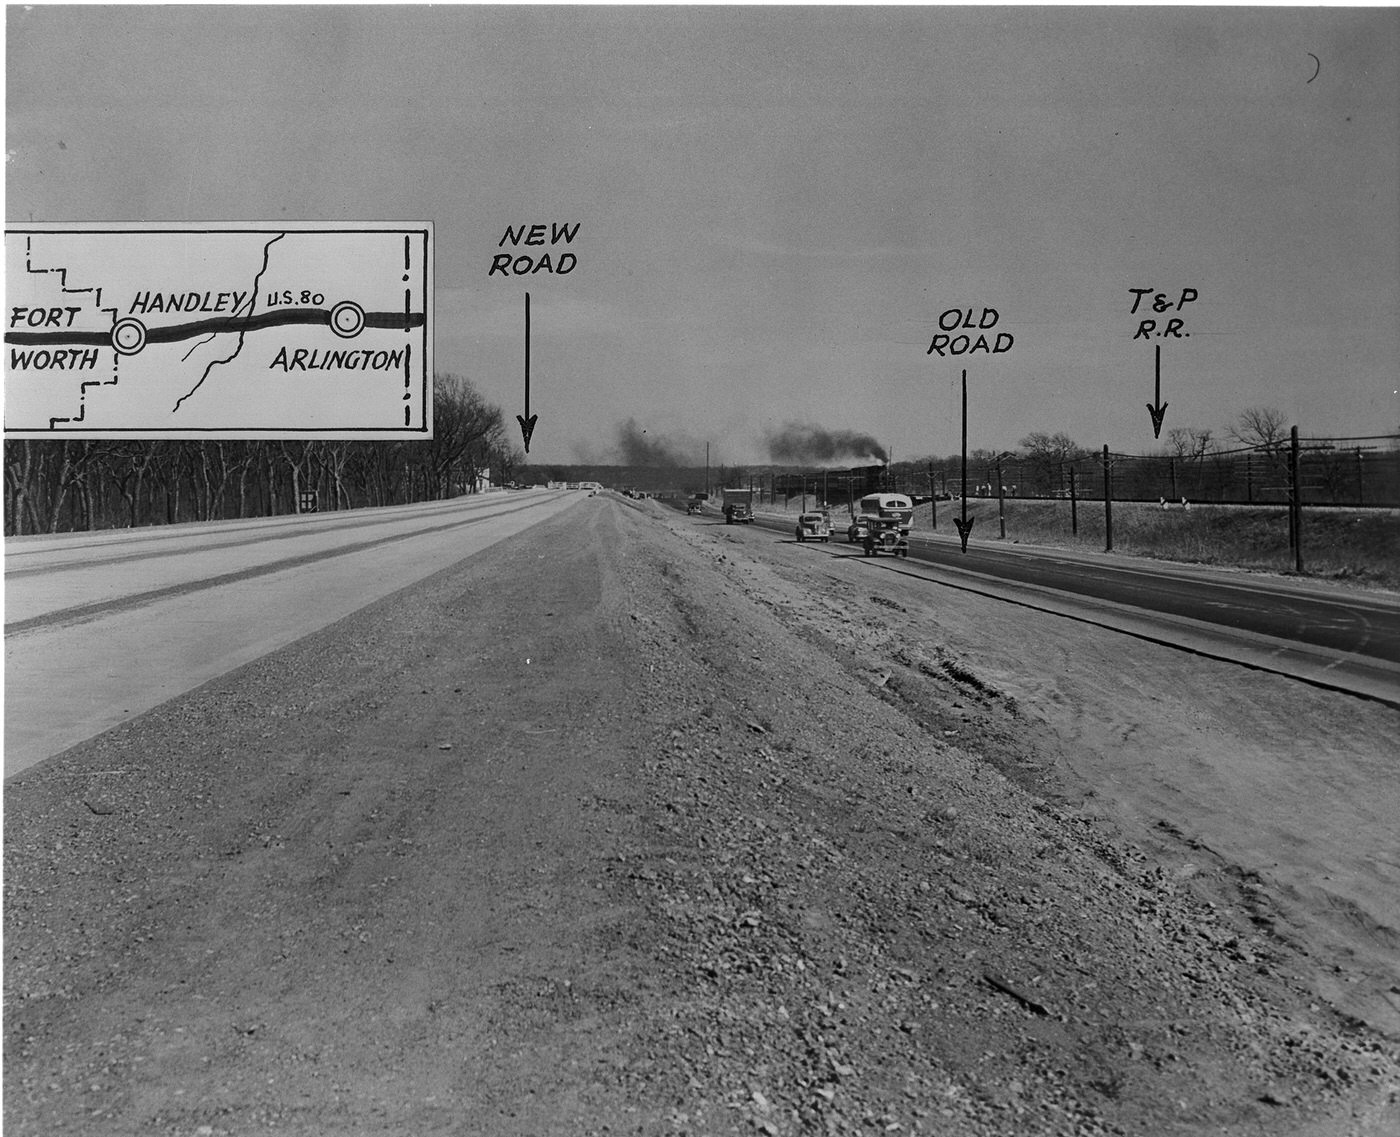 Highway U.S. 80 (Dallas Pike) between Fort Worth and Arlington near Handley, 1947